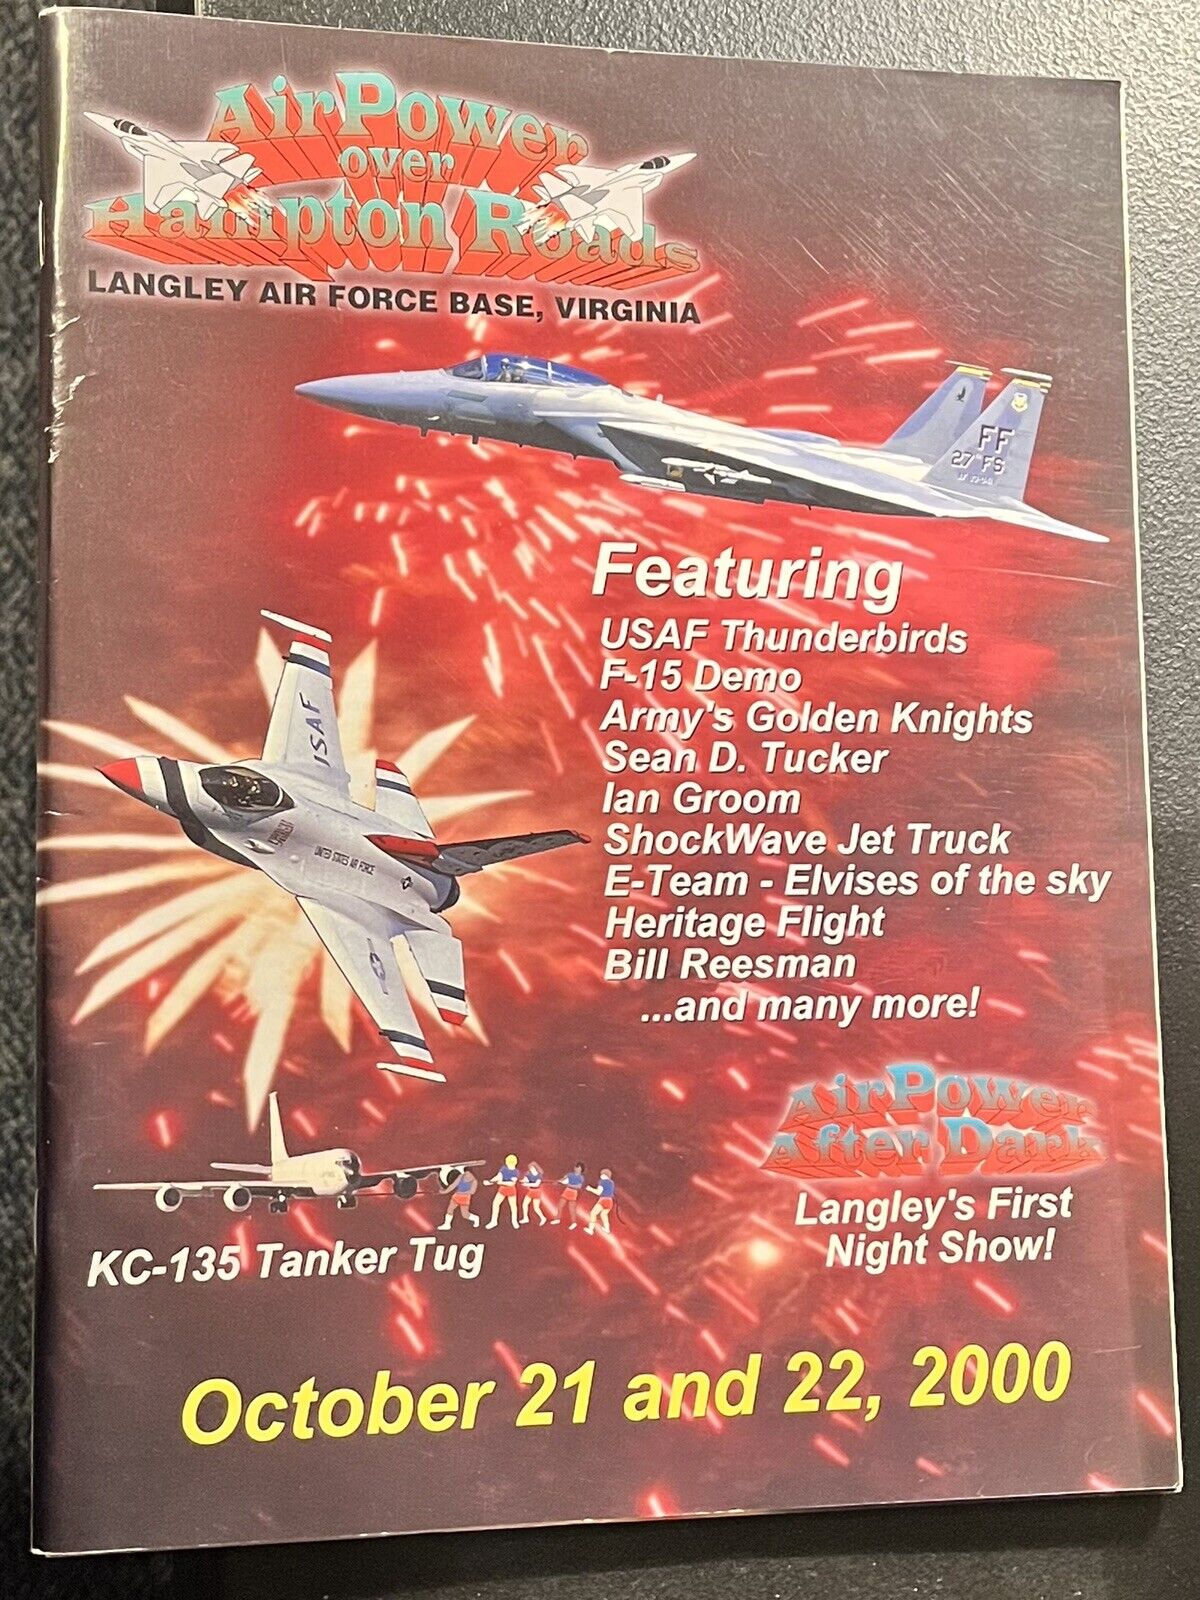 2000 Air Power Over Hampton Roads Air Show Program At Langley Air Force Base